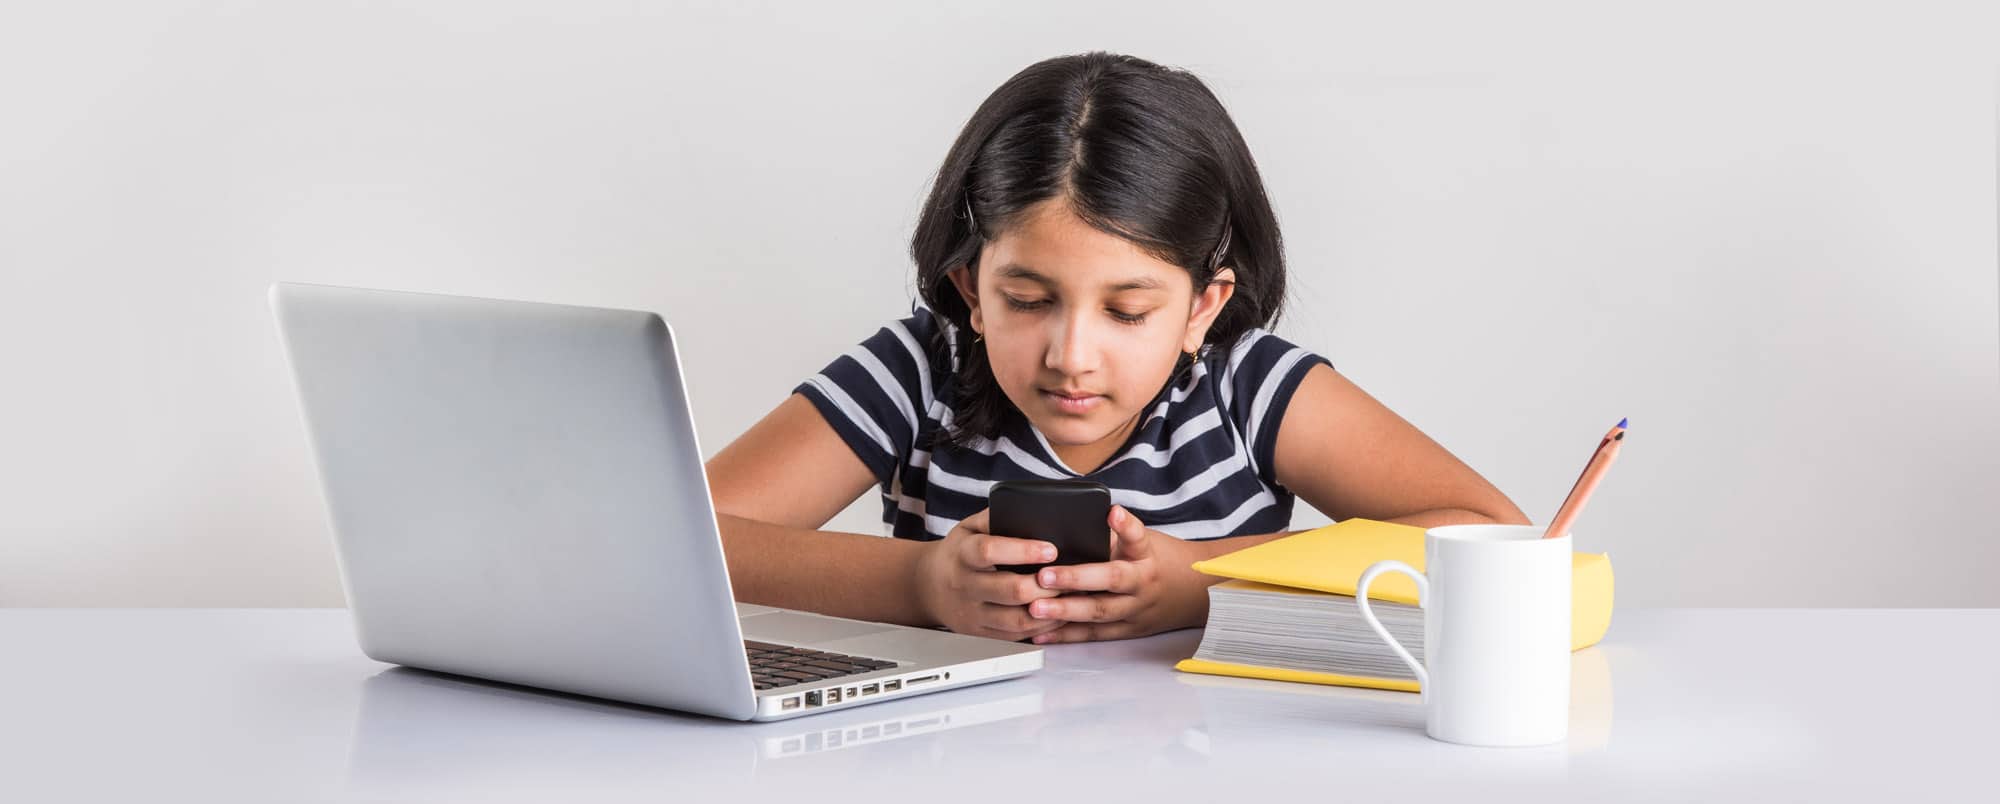 iphone message - How Social Media Content Affect Children's Behavior